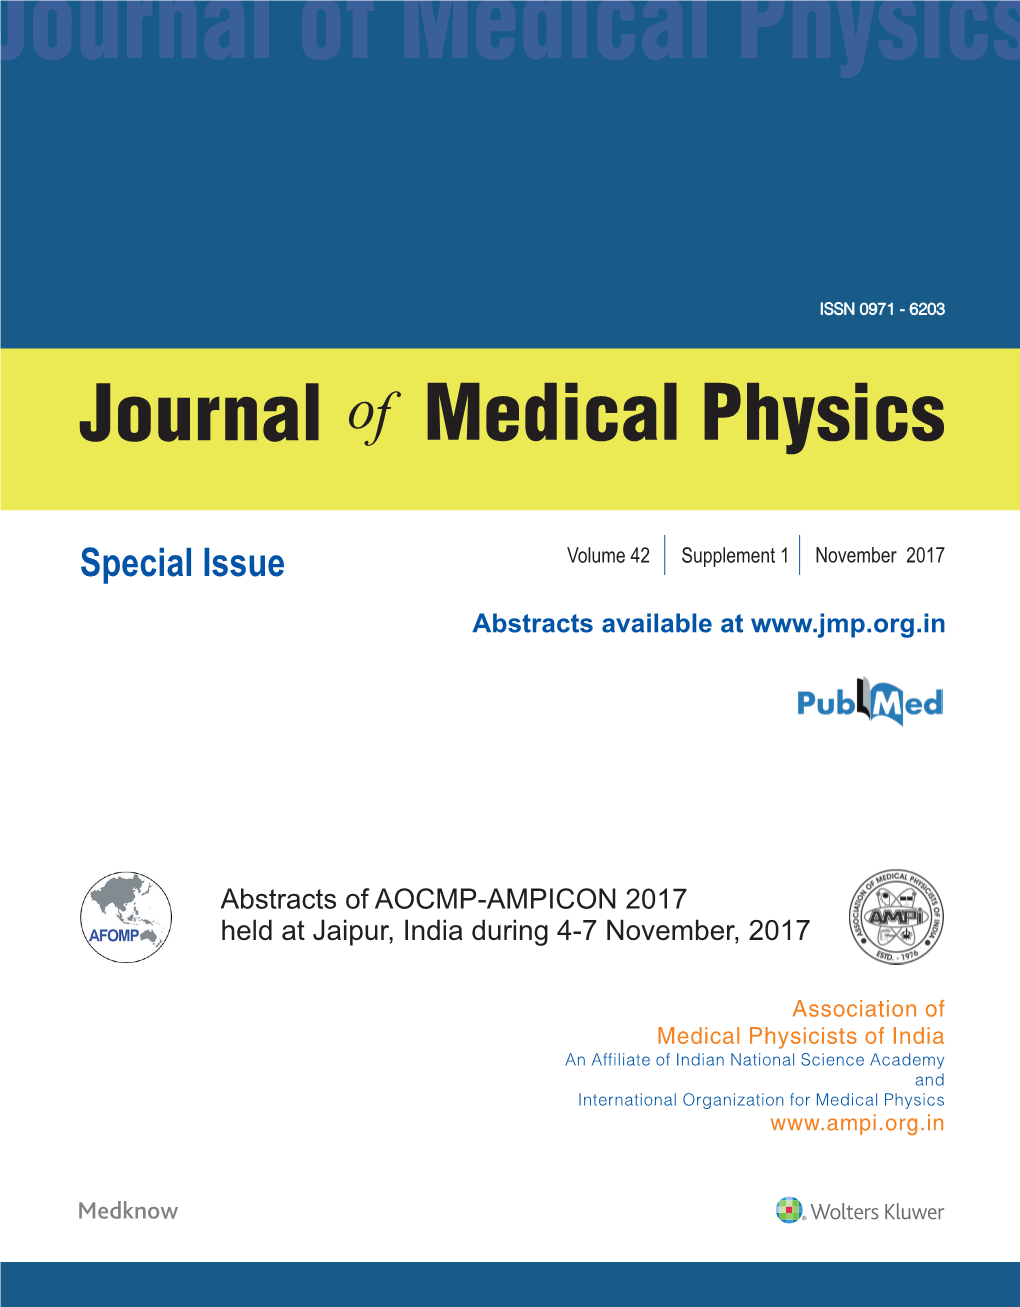 Journal of Medical Physics (Incorporating AMPI Medical Physics Bulletin)